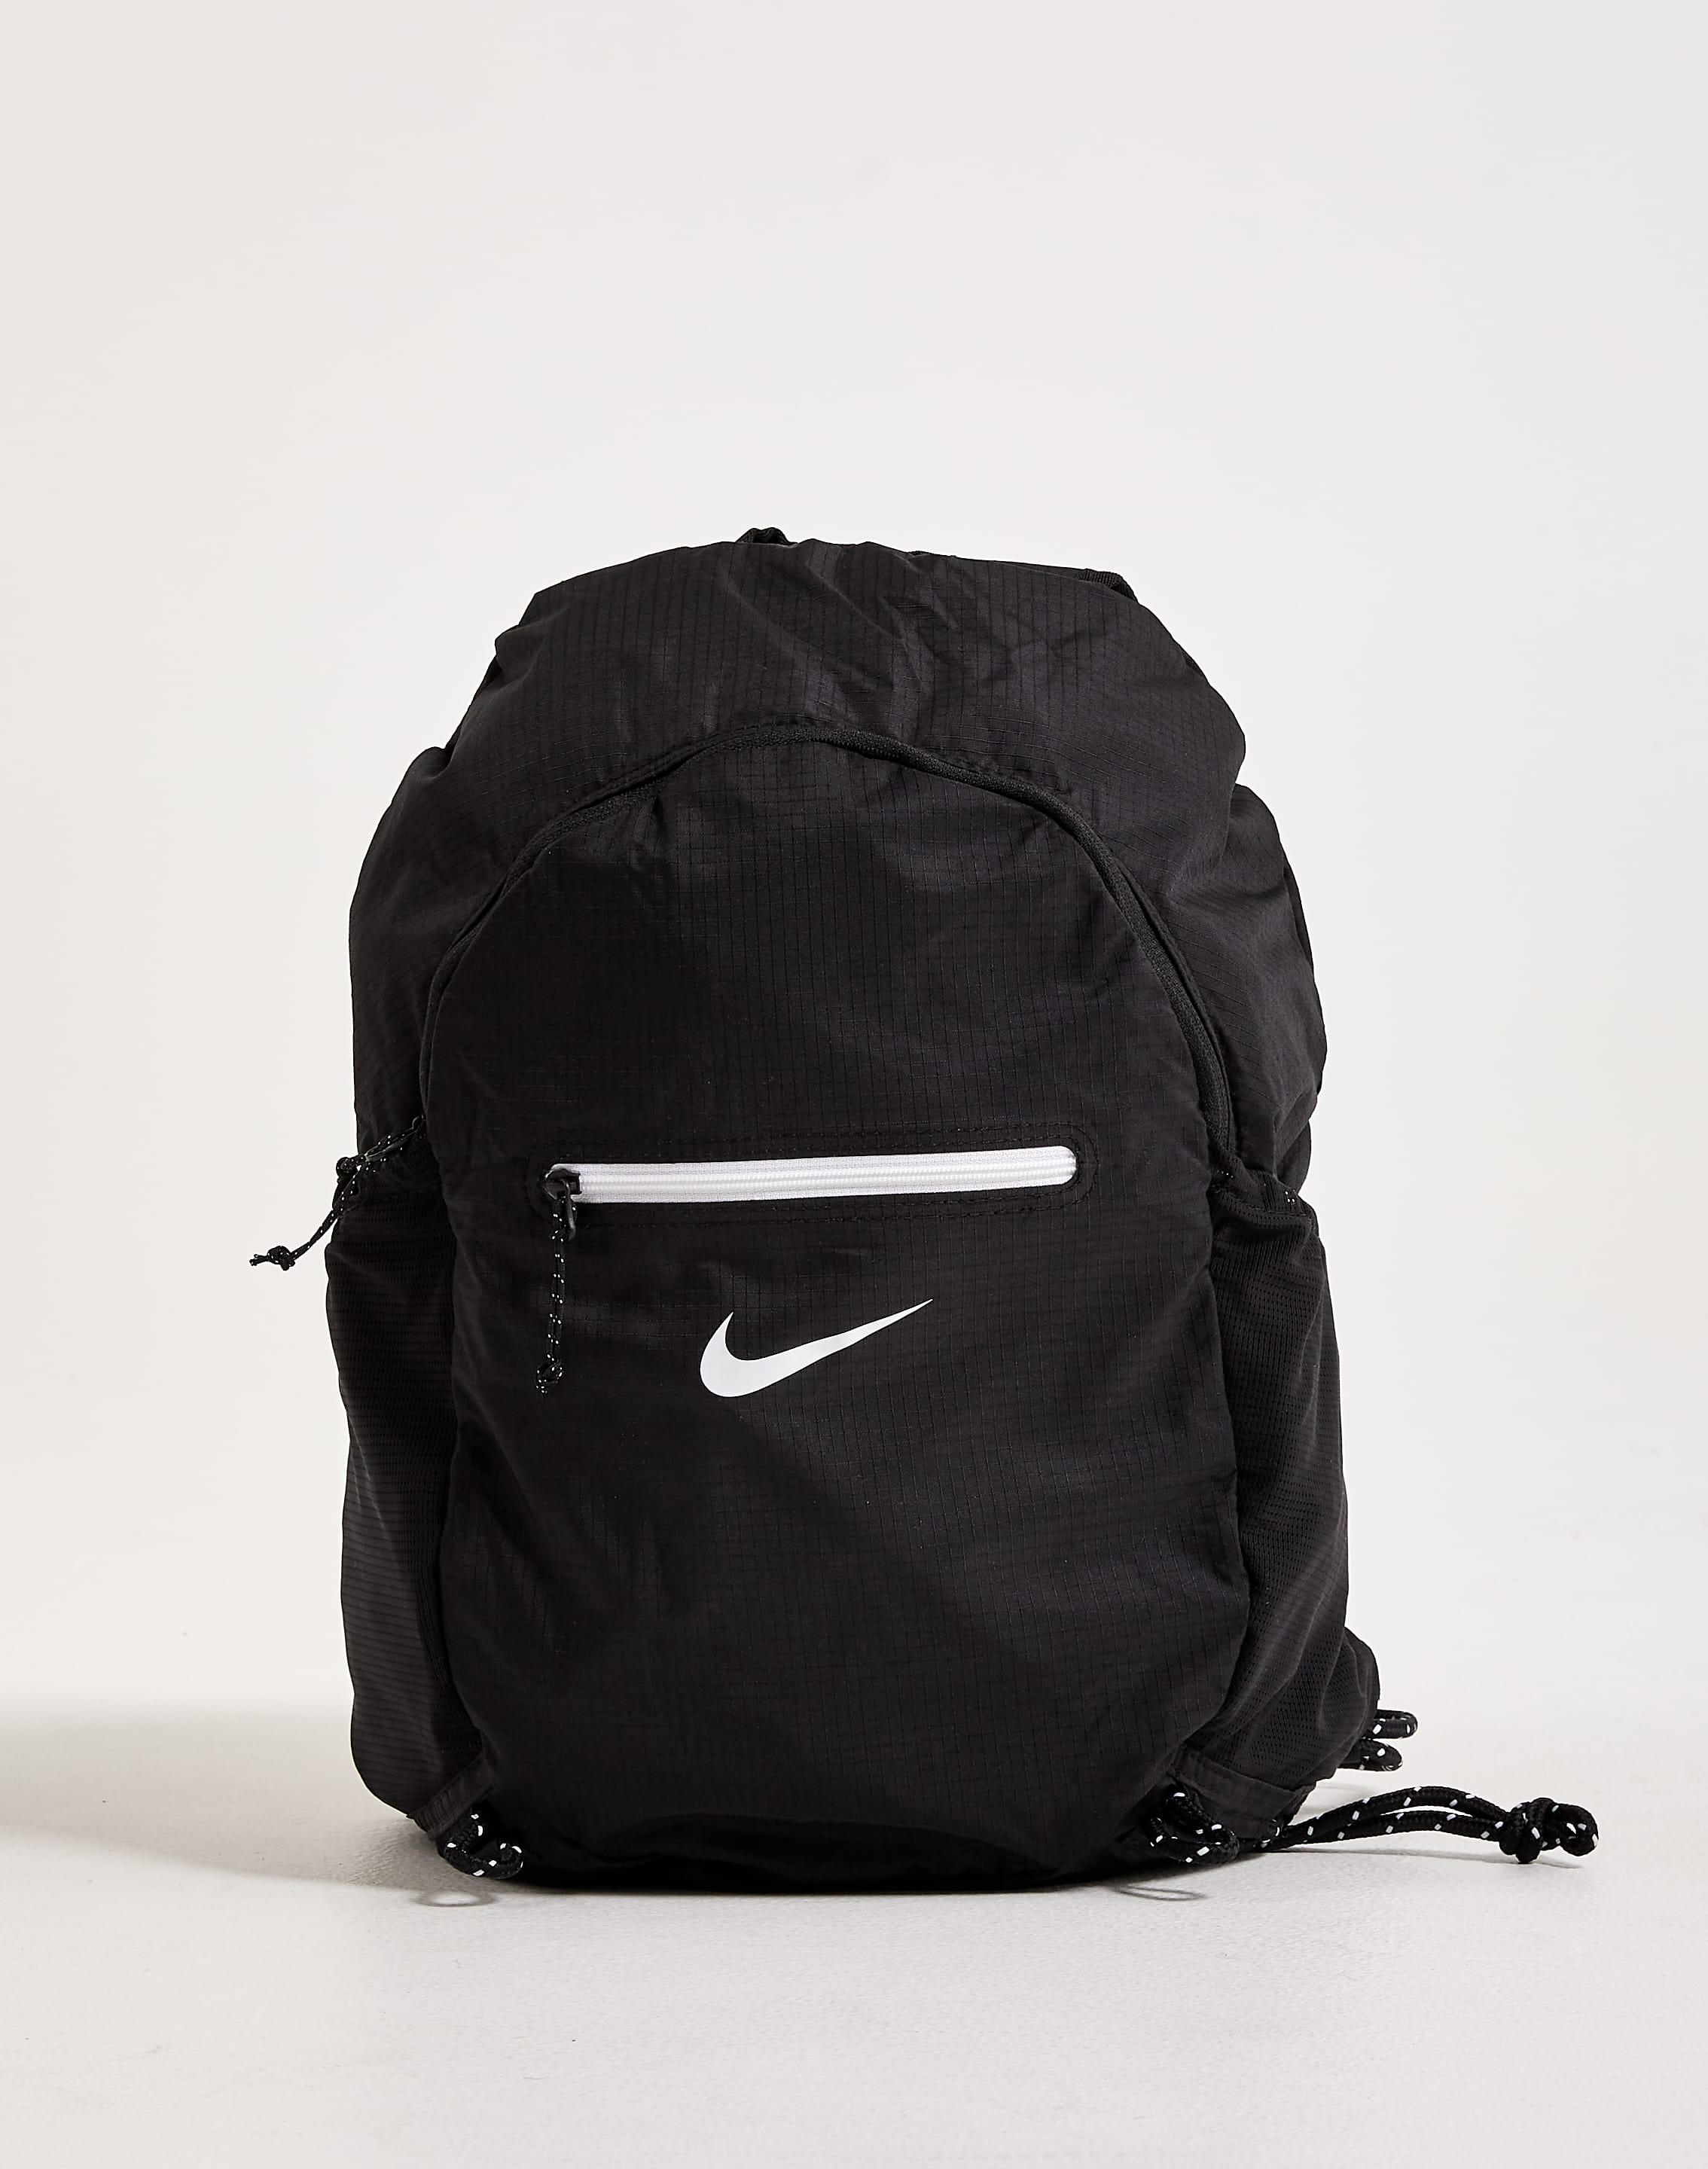 Flagermus salut Onset Nike Stash Backpack – DTLR